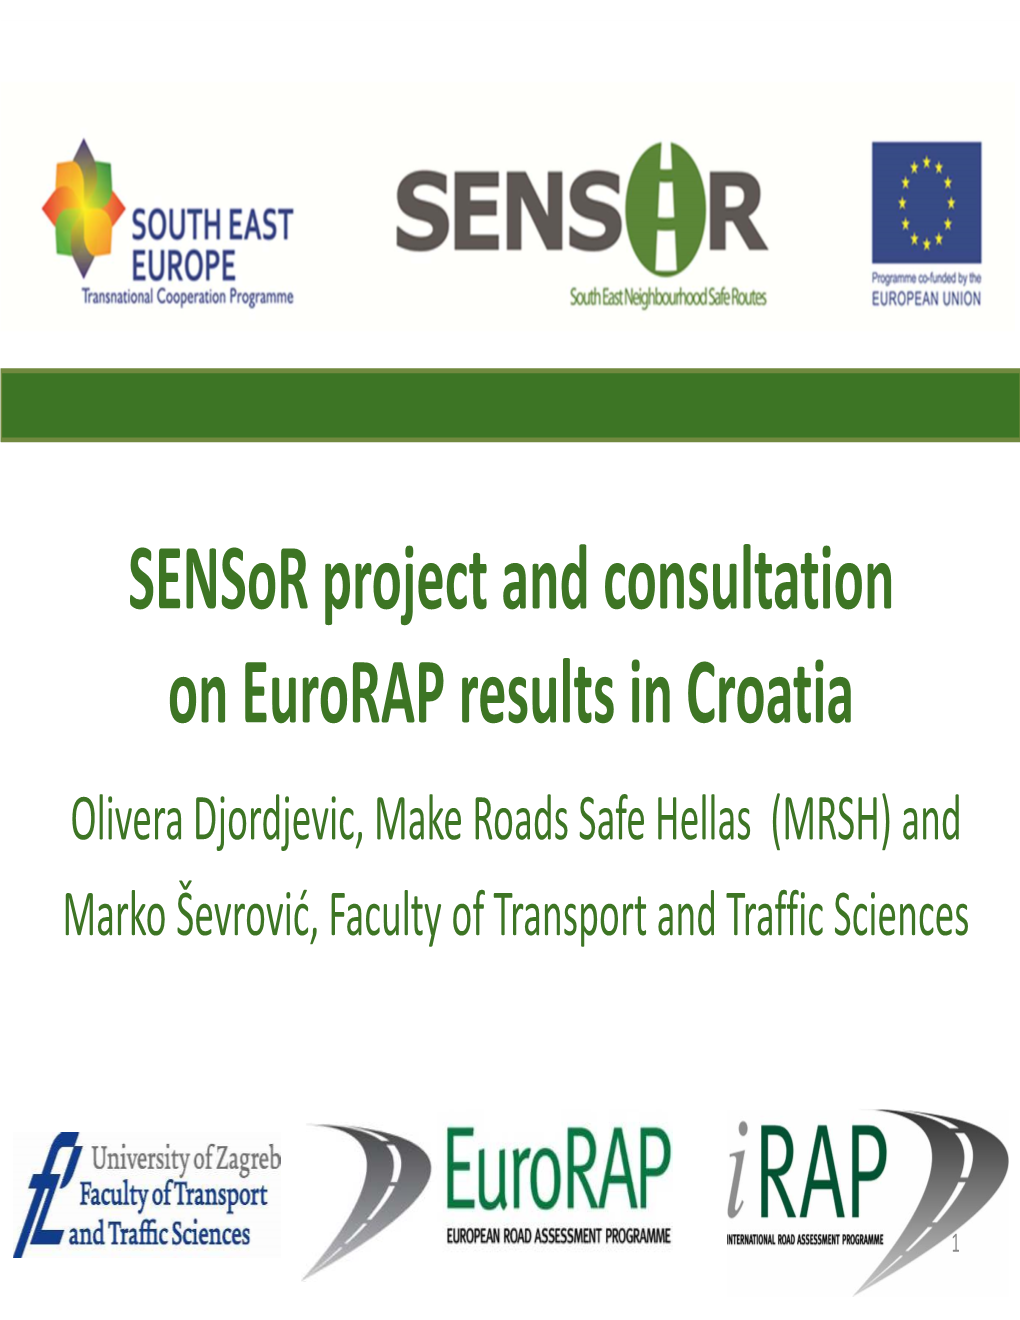 Sensor Project and Consultation on Eurorap Results in Croatia